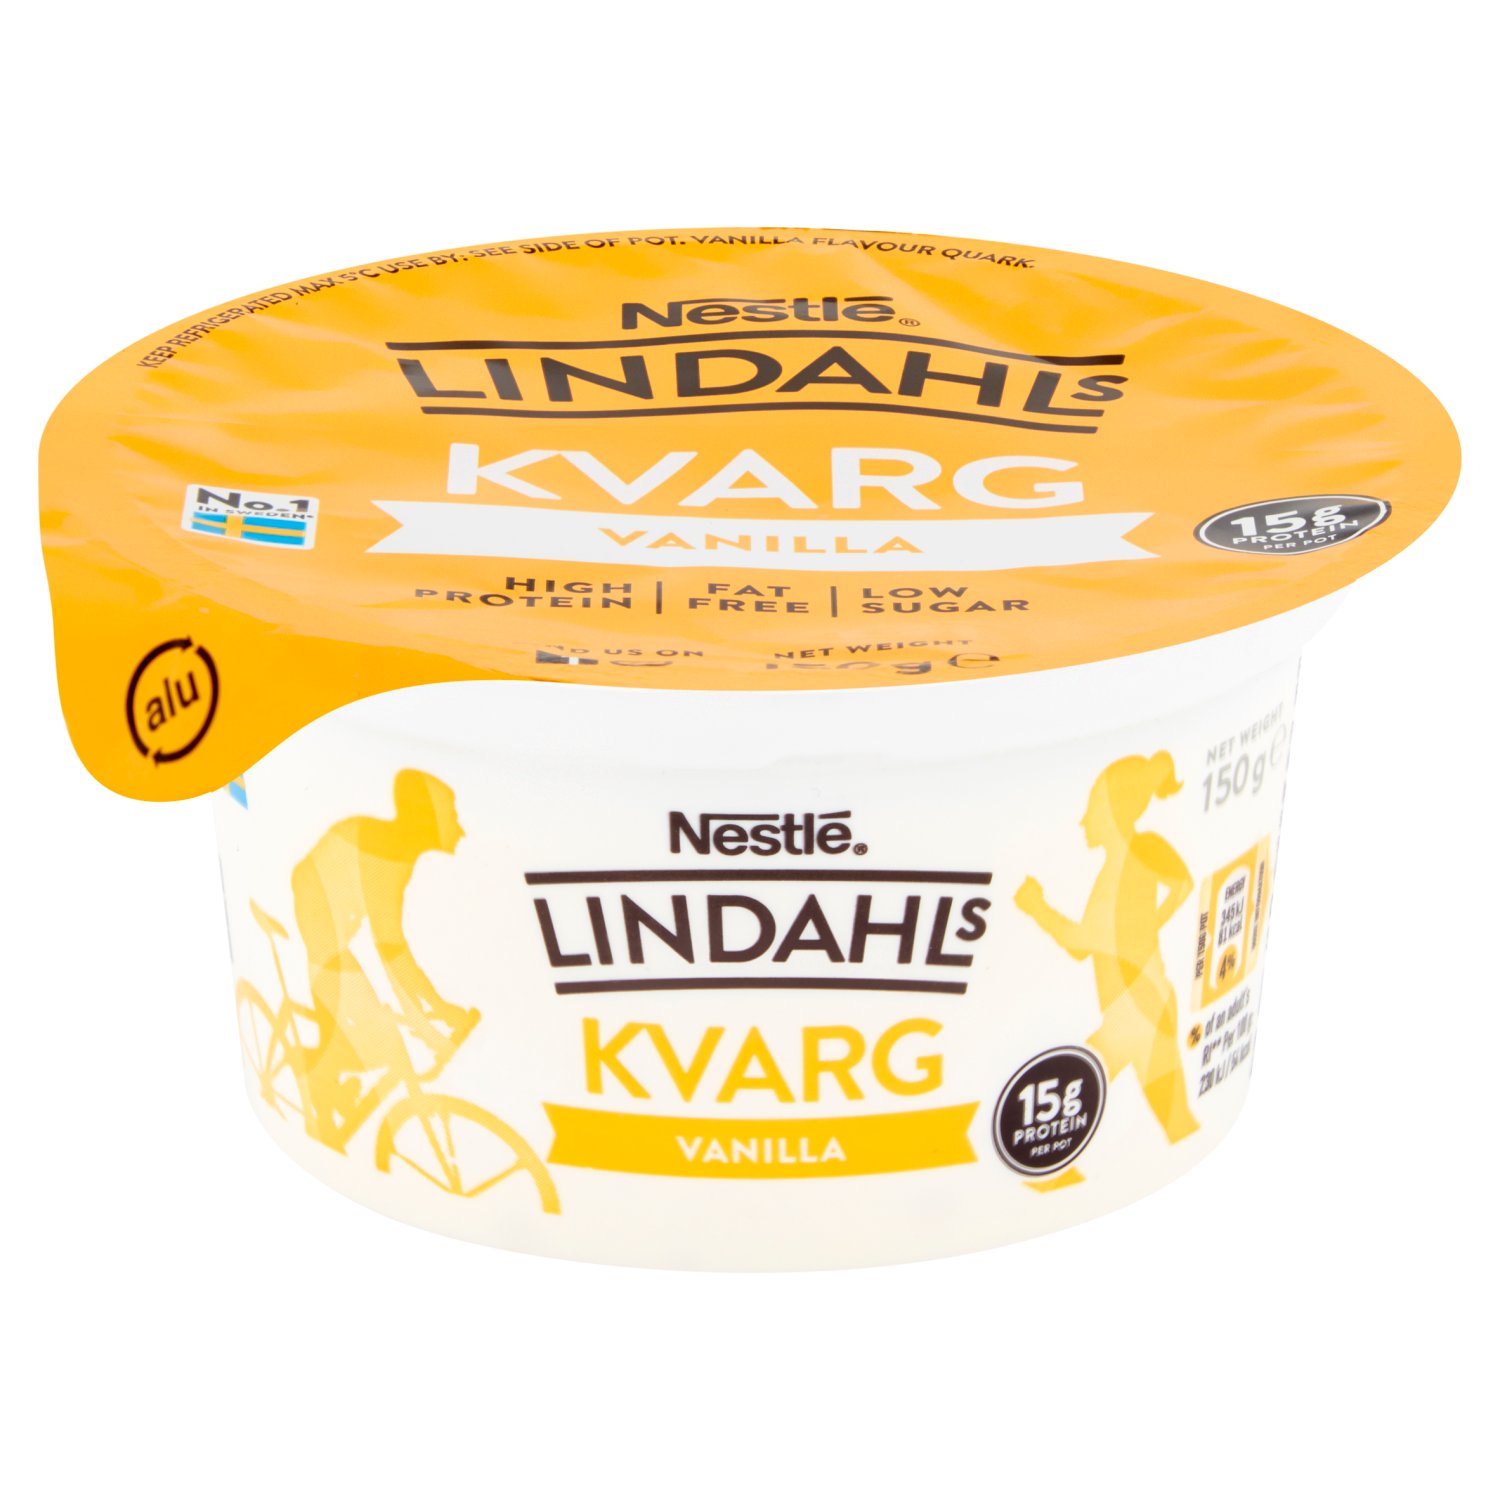 Lindahls Kvarg Vanilla Yogurt (150 g)